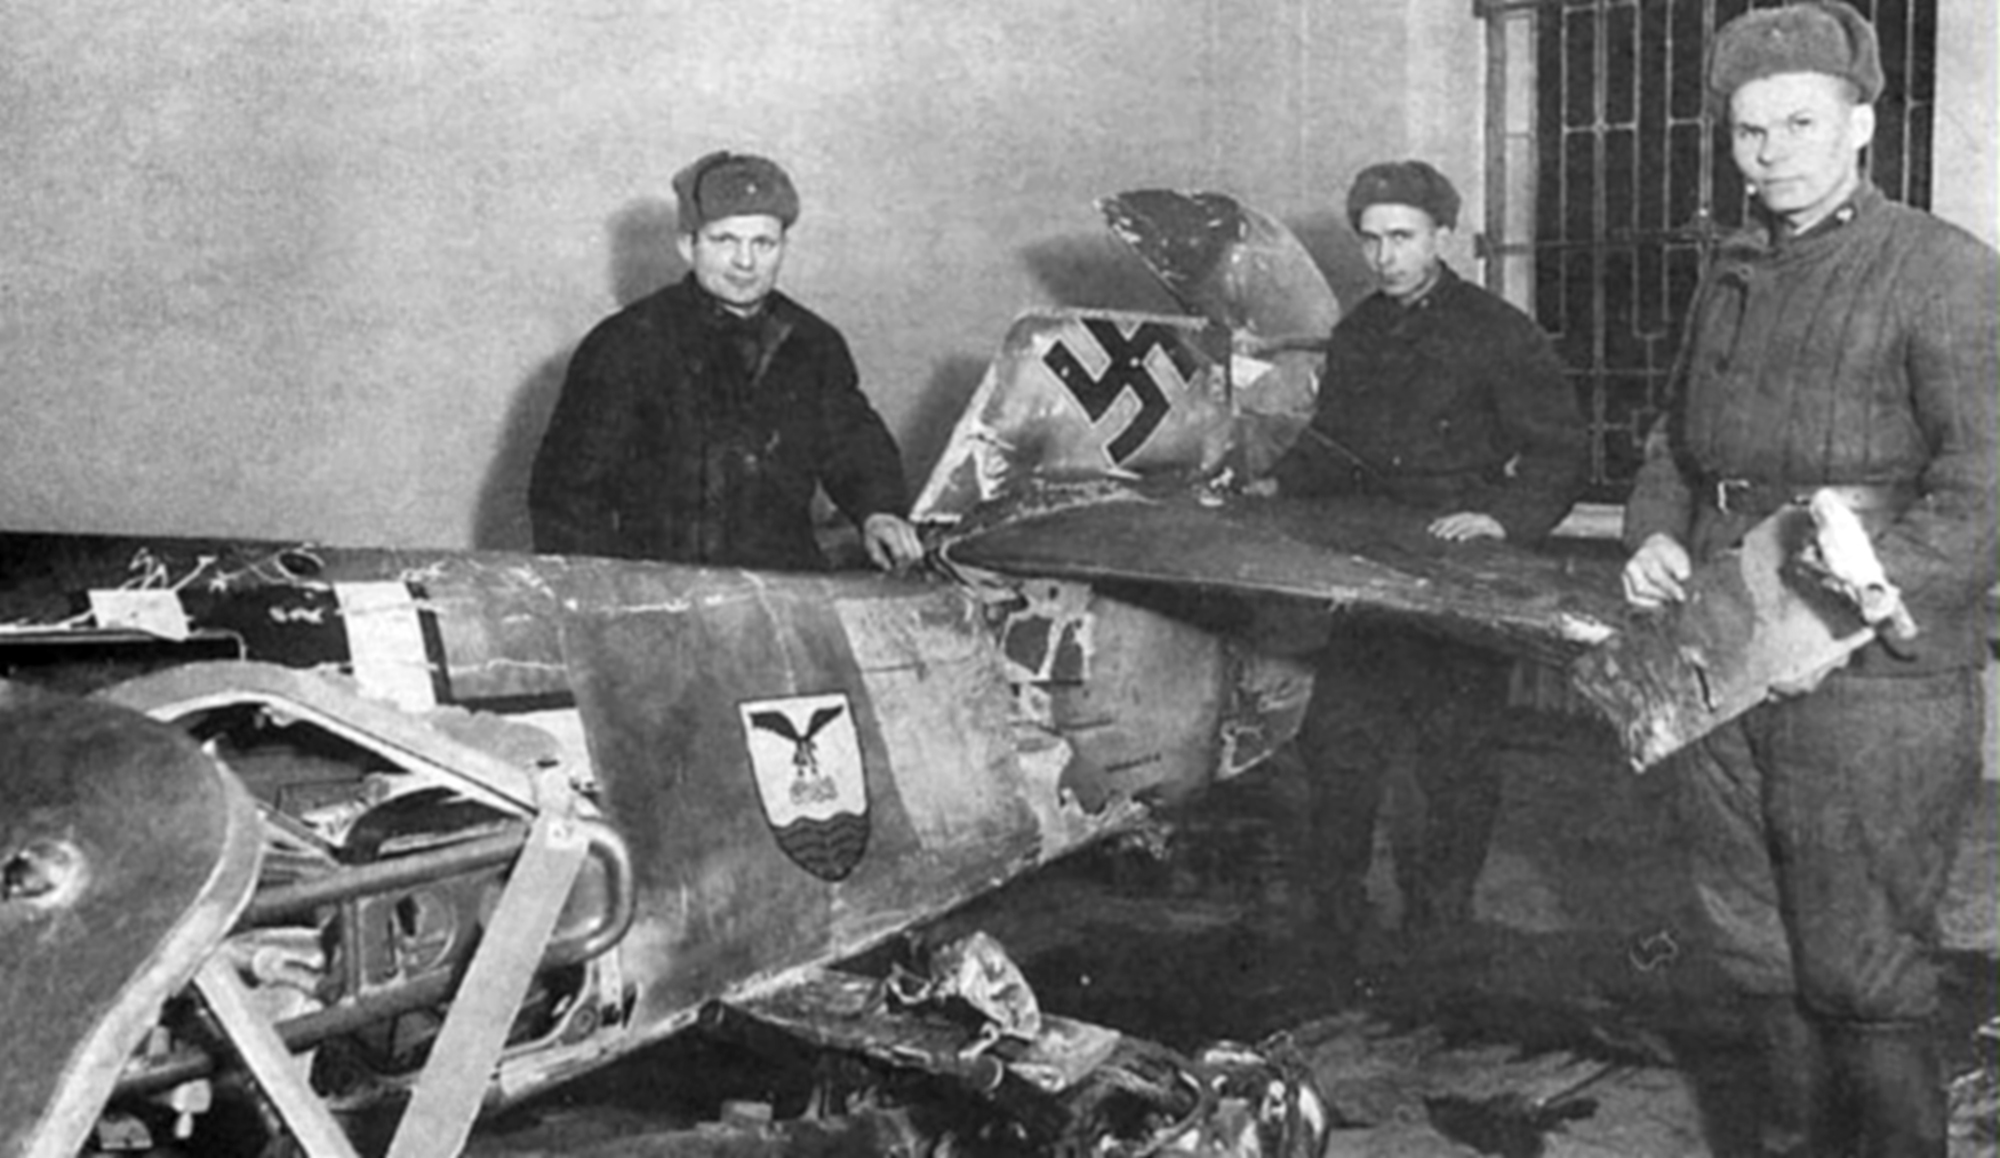 Ostfront Messerschmitt Bf 109F wreckage on display in Russia 01